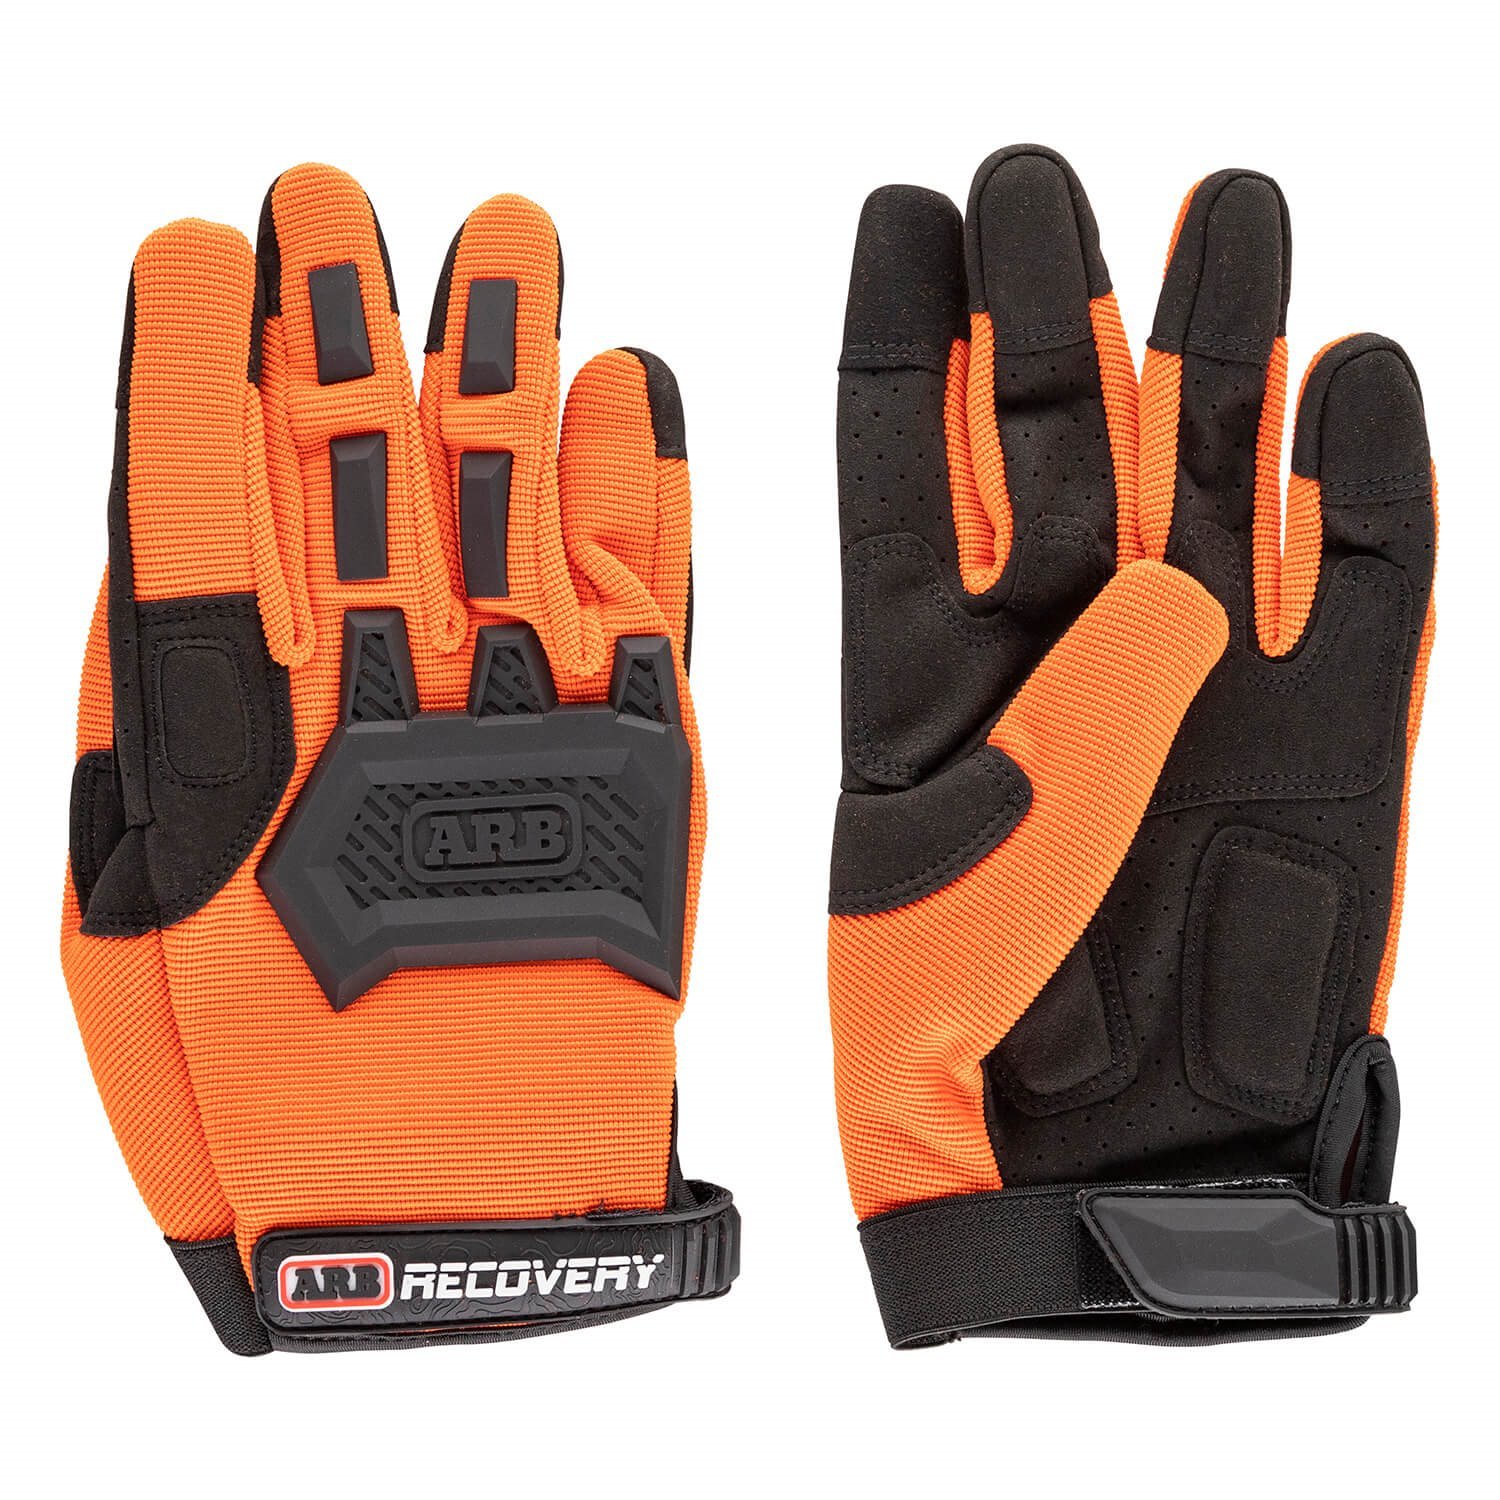 GLOVEMX Recovery Gloves